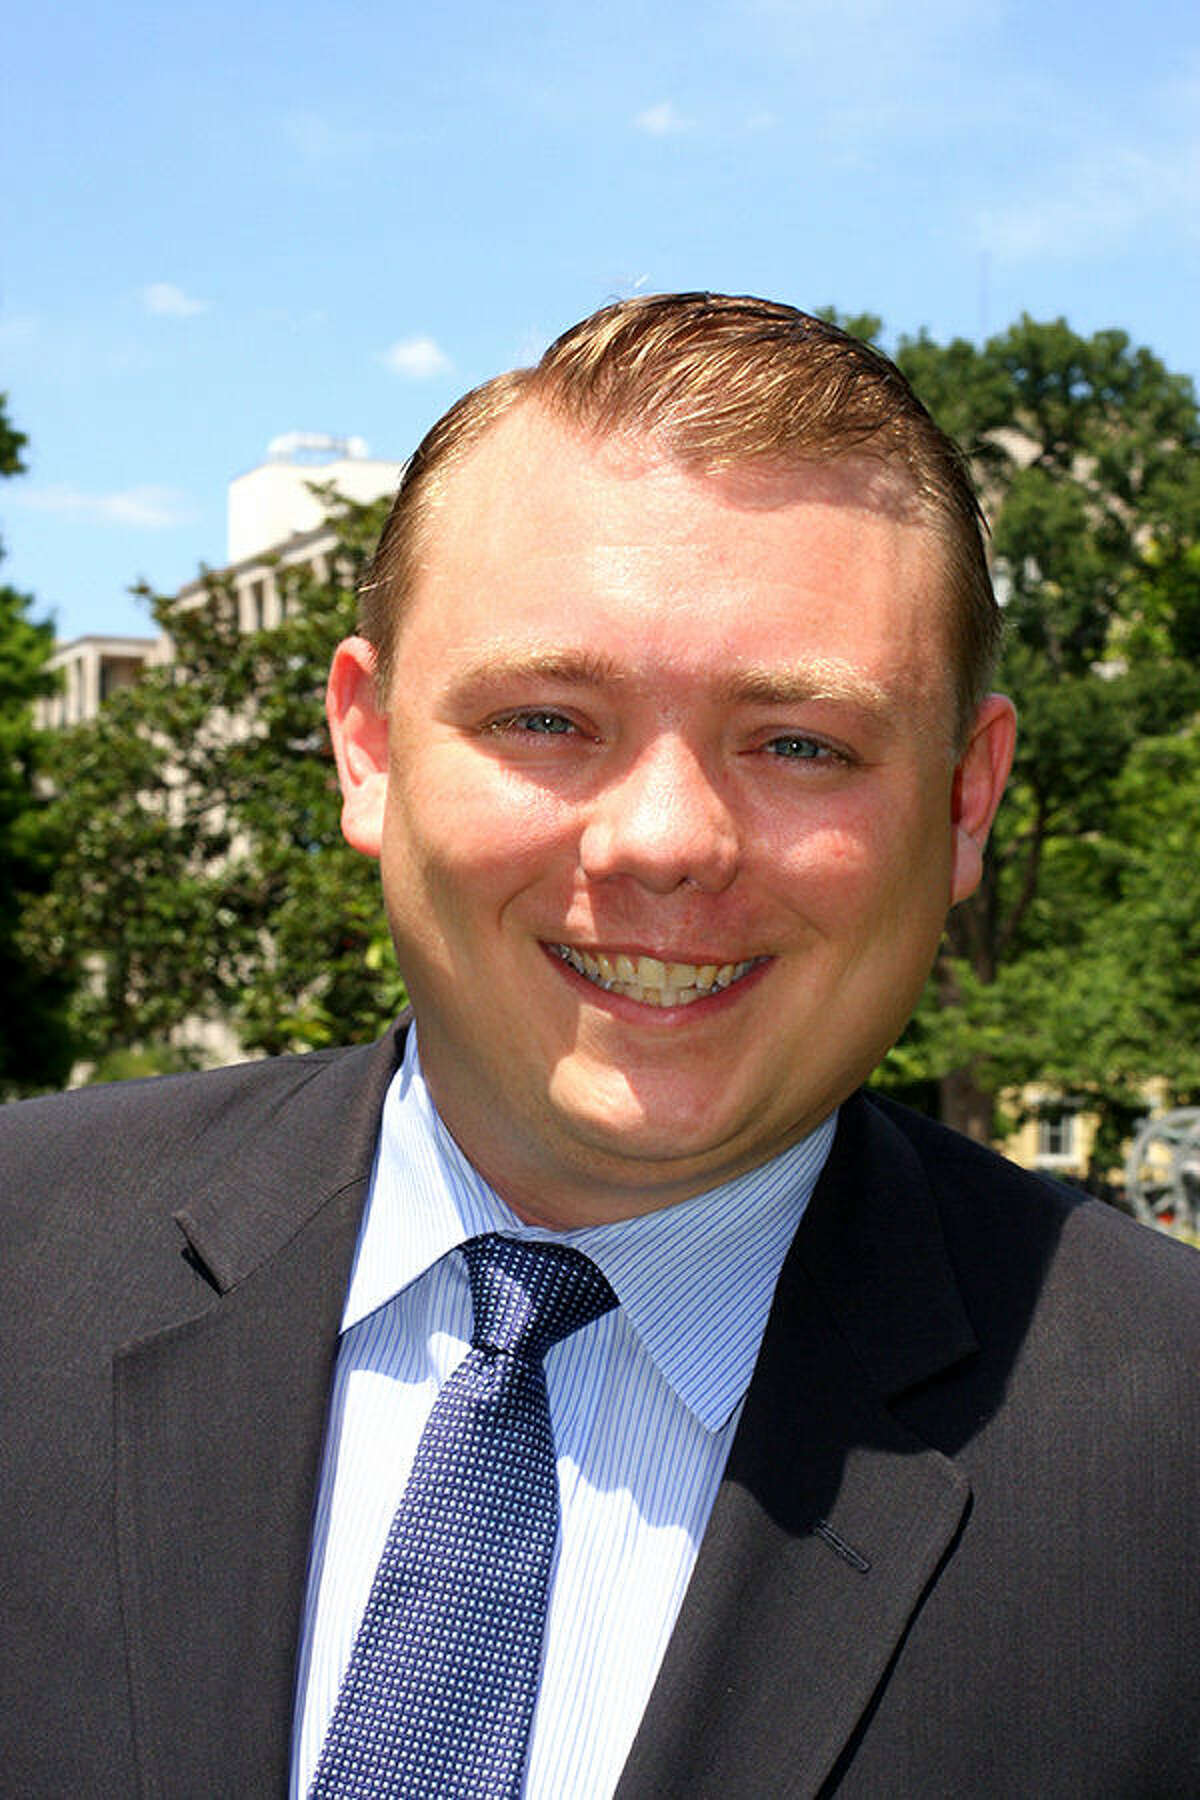 Matt Mackowiak works in Austin and Washington as a GOP consultant. He heads Potomac Strategy Group.